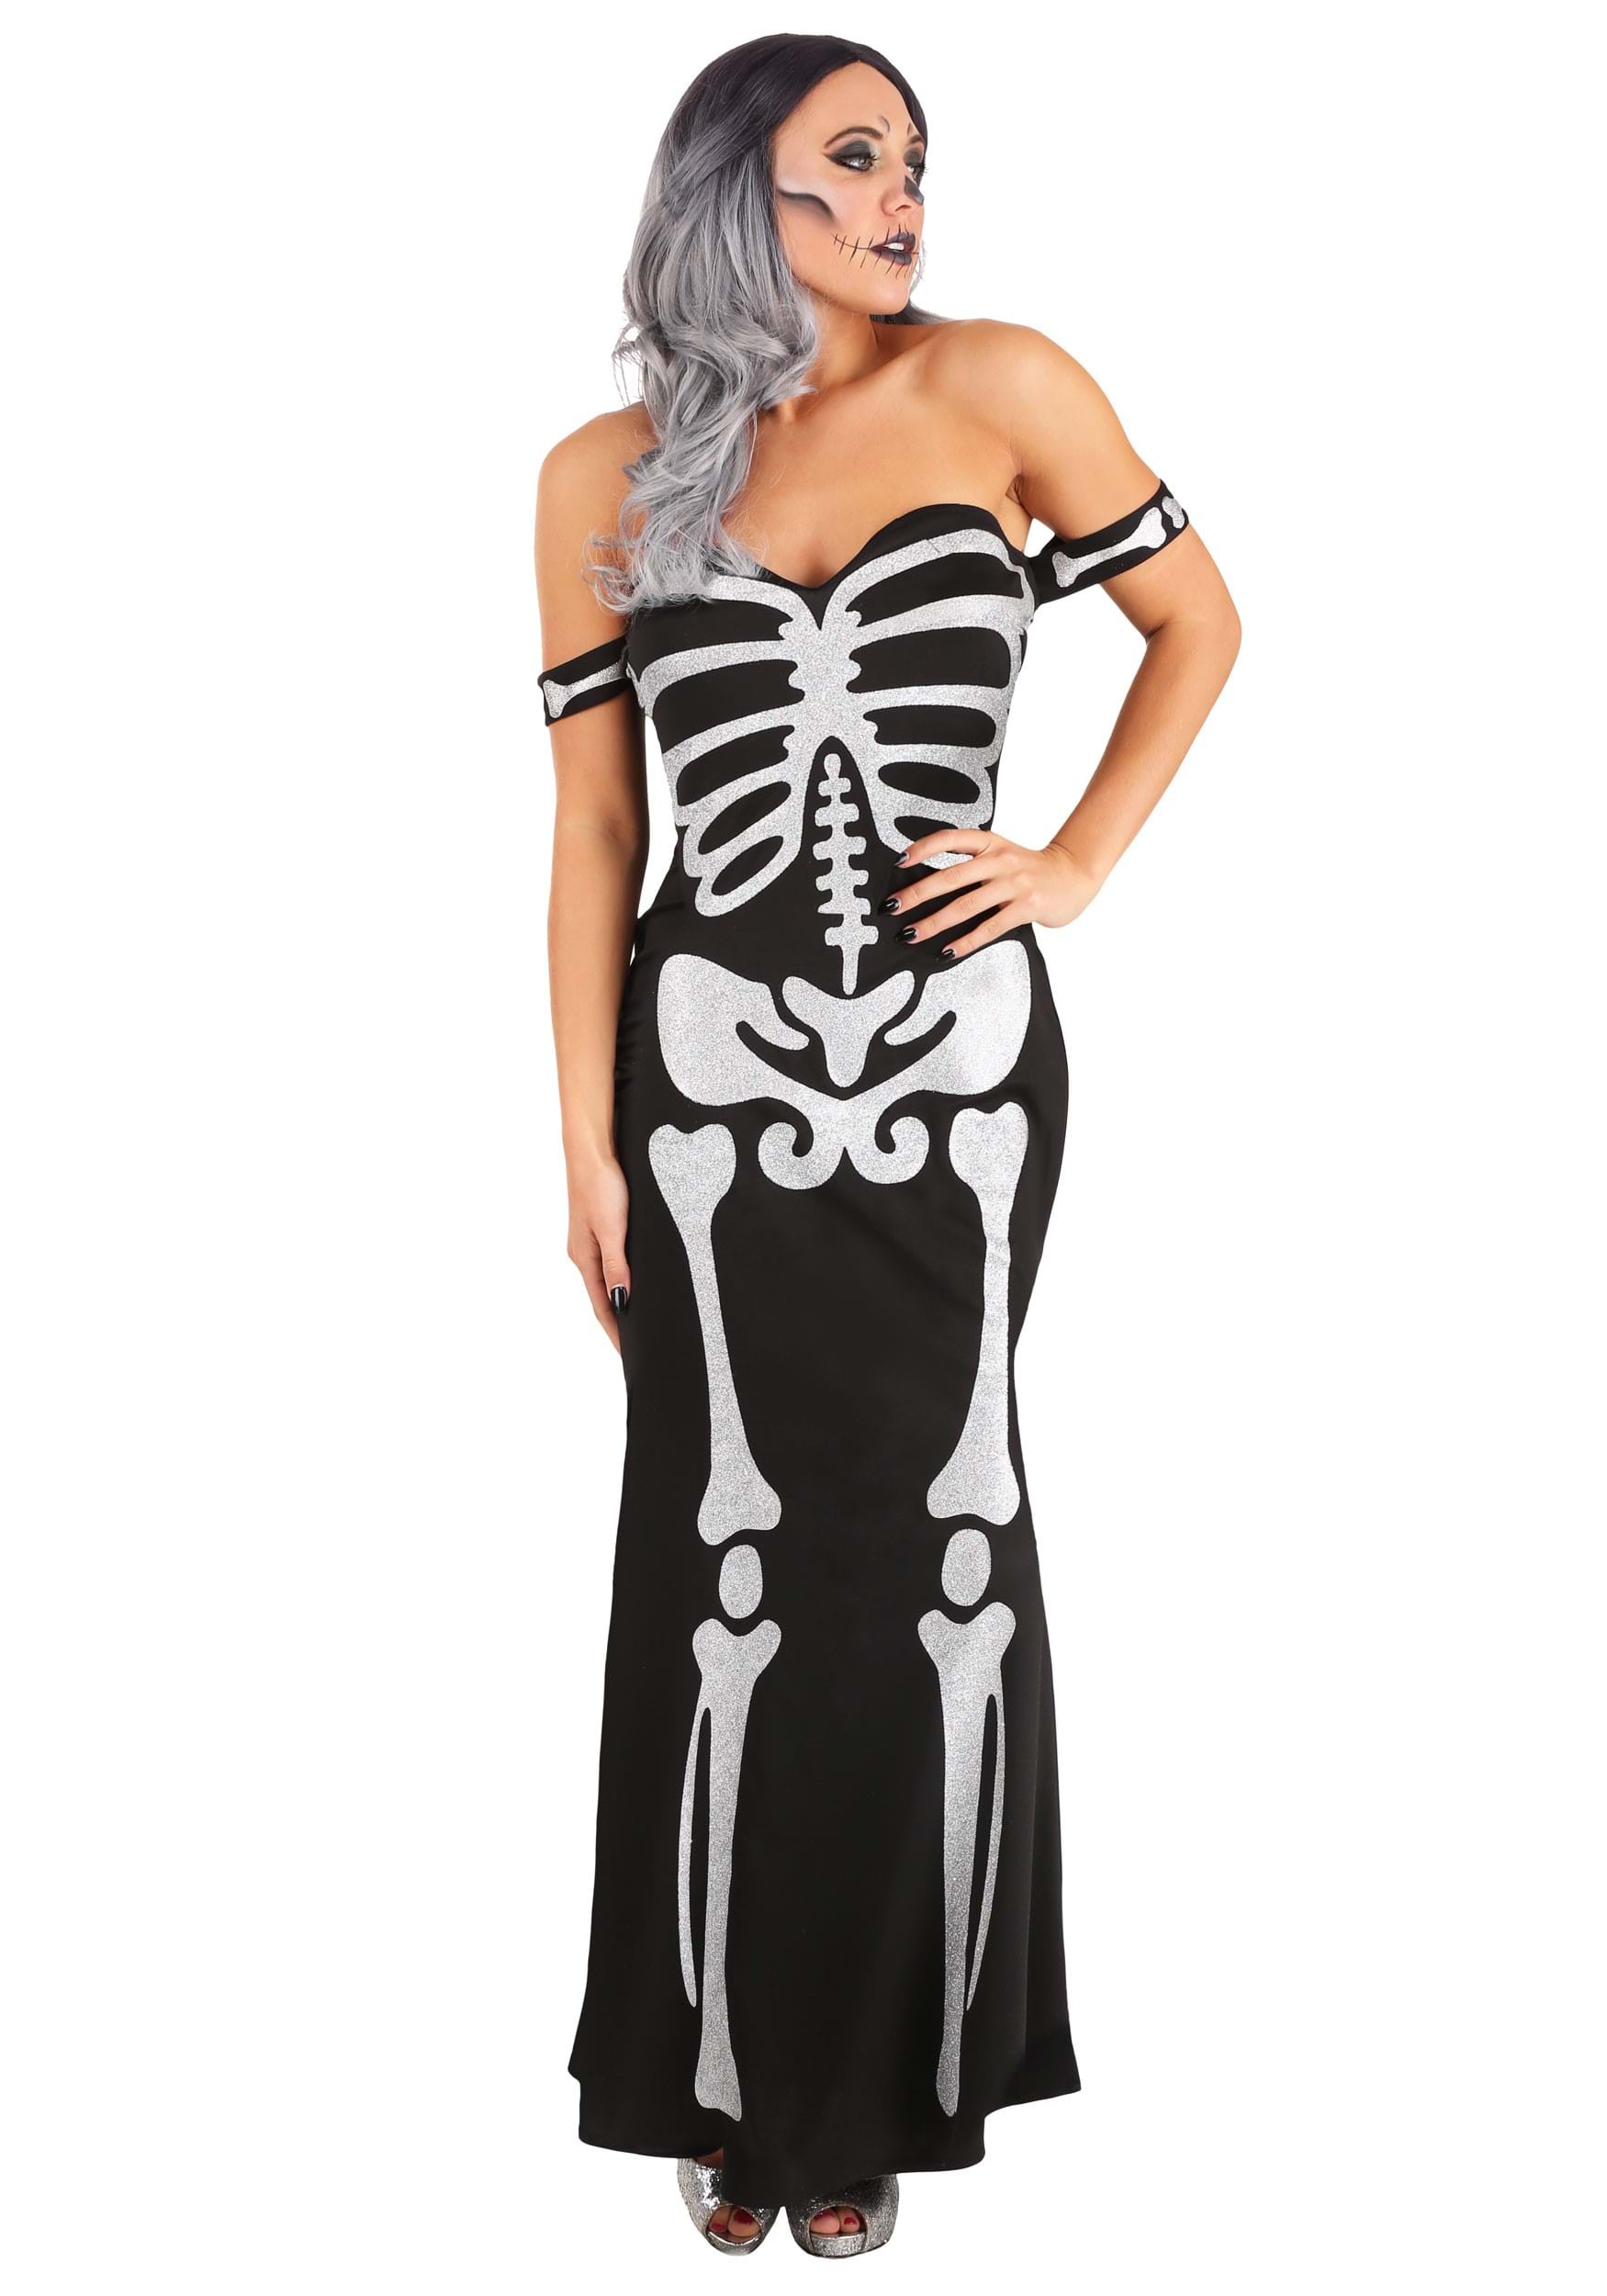 Photos - Fancy Dress Fashion FUN Costumes High  Women Skeleton Costume Black/Gray FUN7055AD 